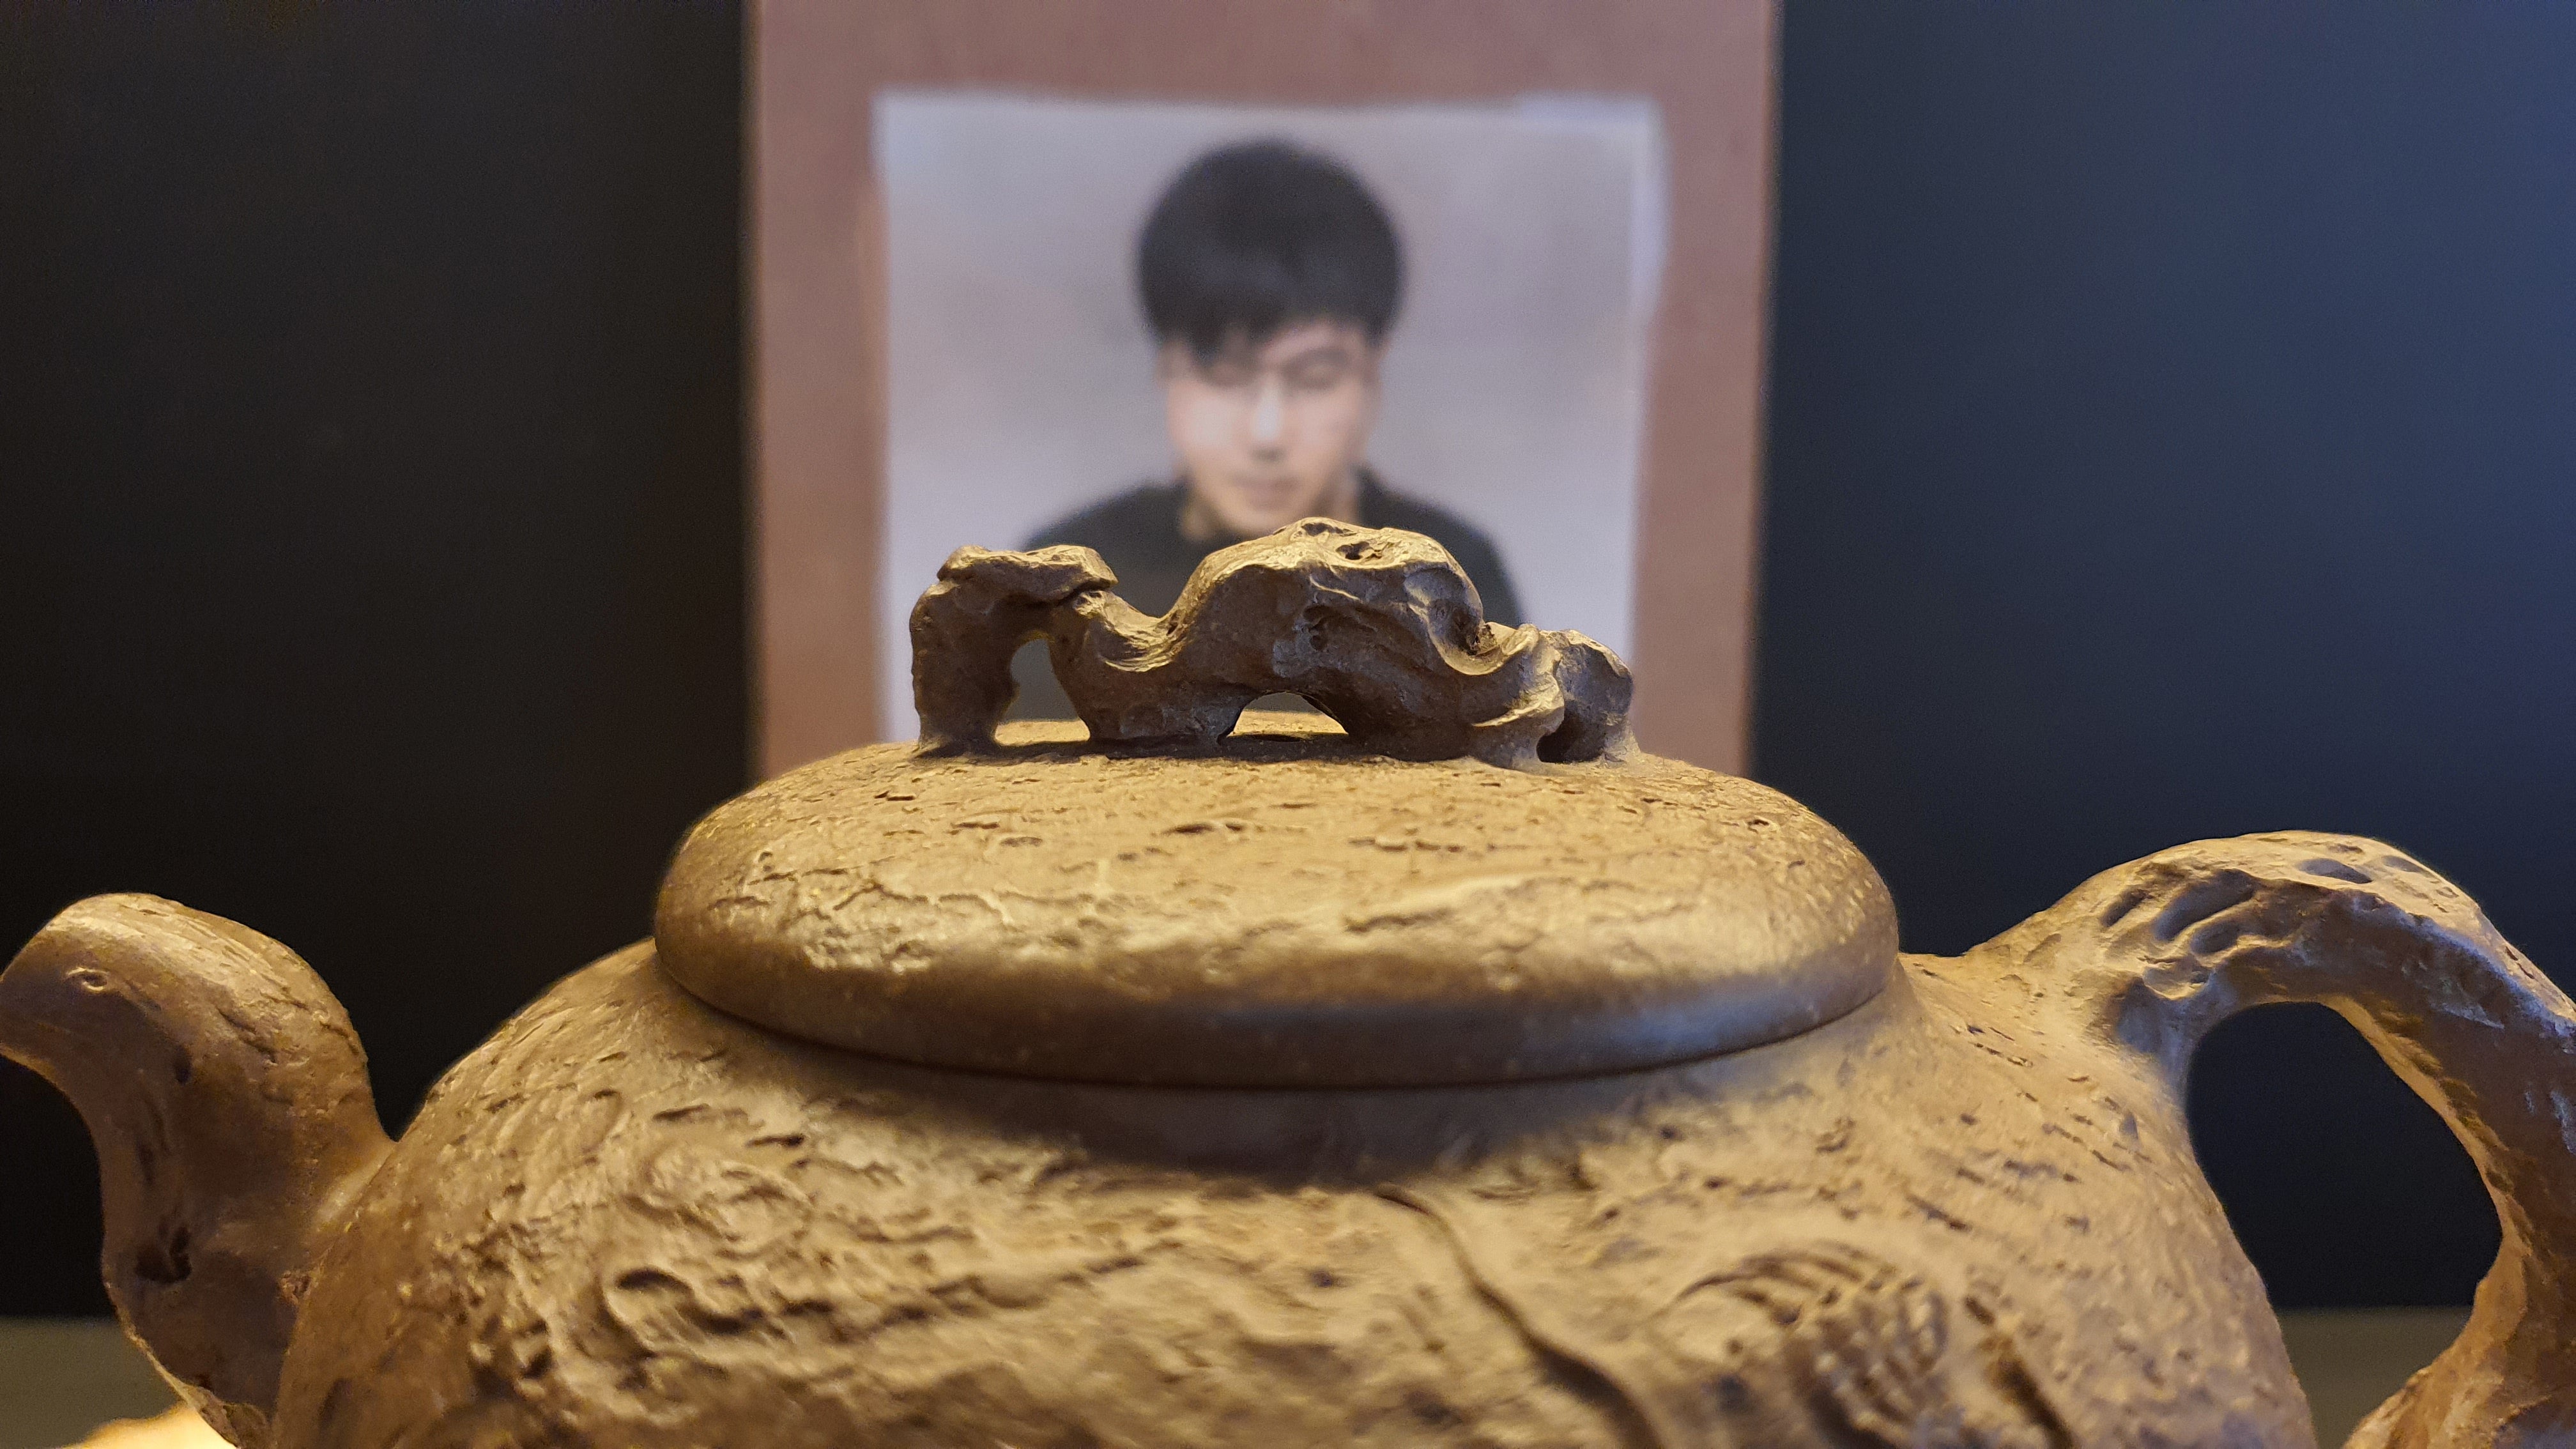 World's First 隐龙供春 "Shrouded Dragon GongChun" by HuaQi Ornate Pot Prodigy L4 Zhang Xue Lei 张雪磊, 助理工艺美术师。